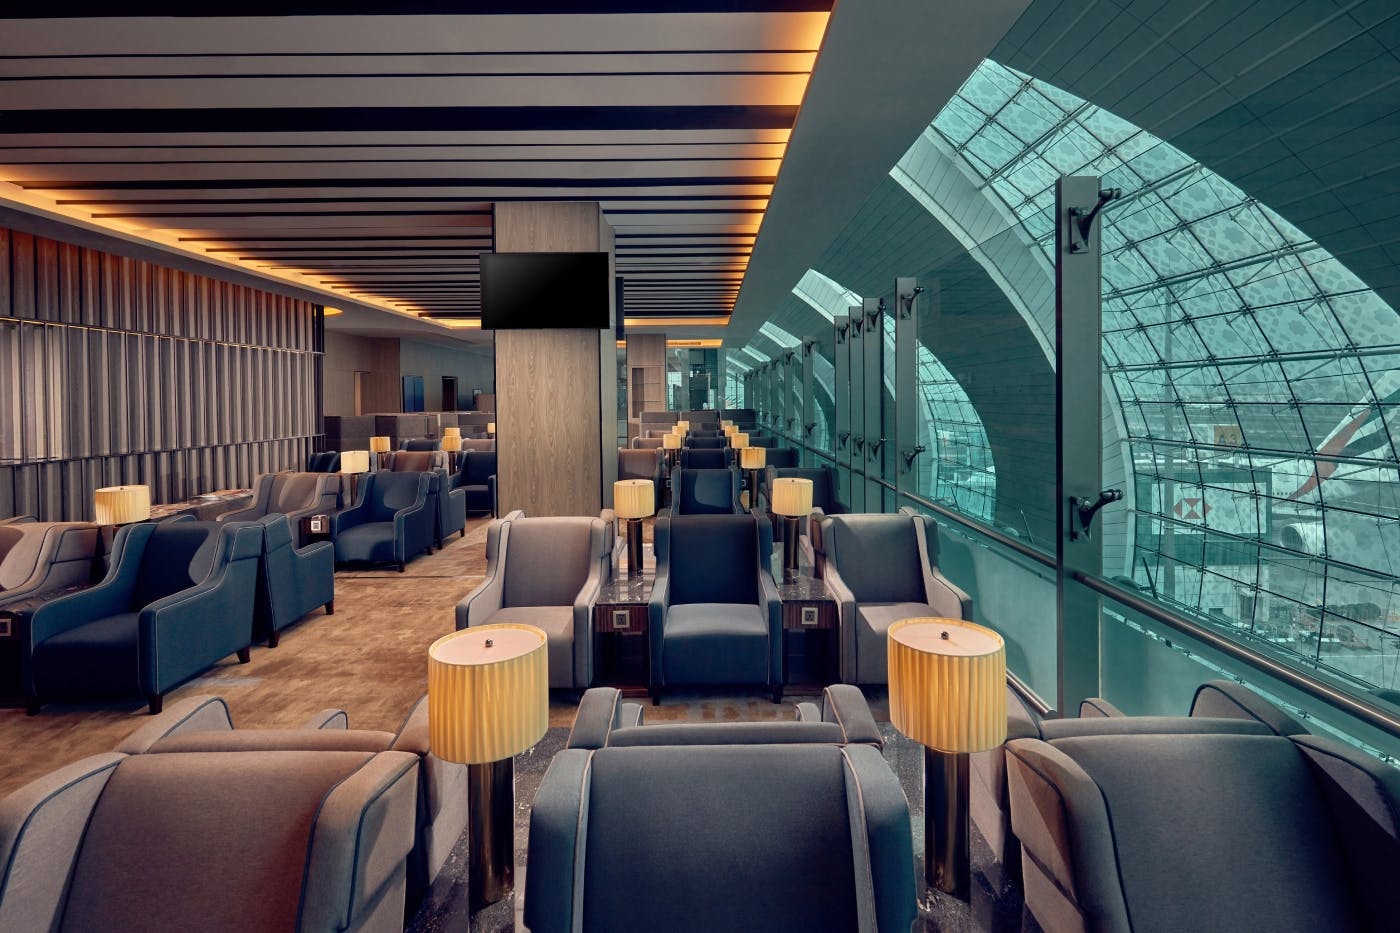 Dubai International Airport Departures Plaza Premium Lounge tickets Musement